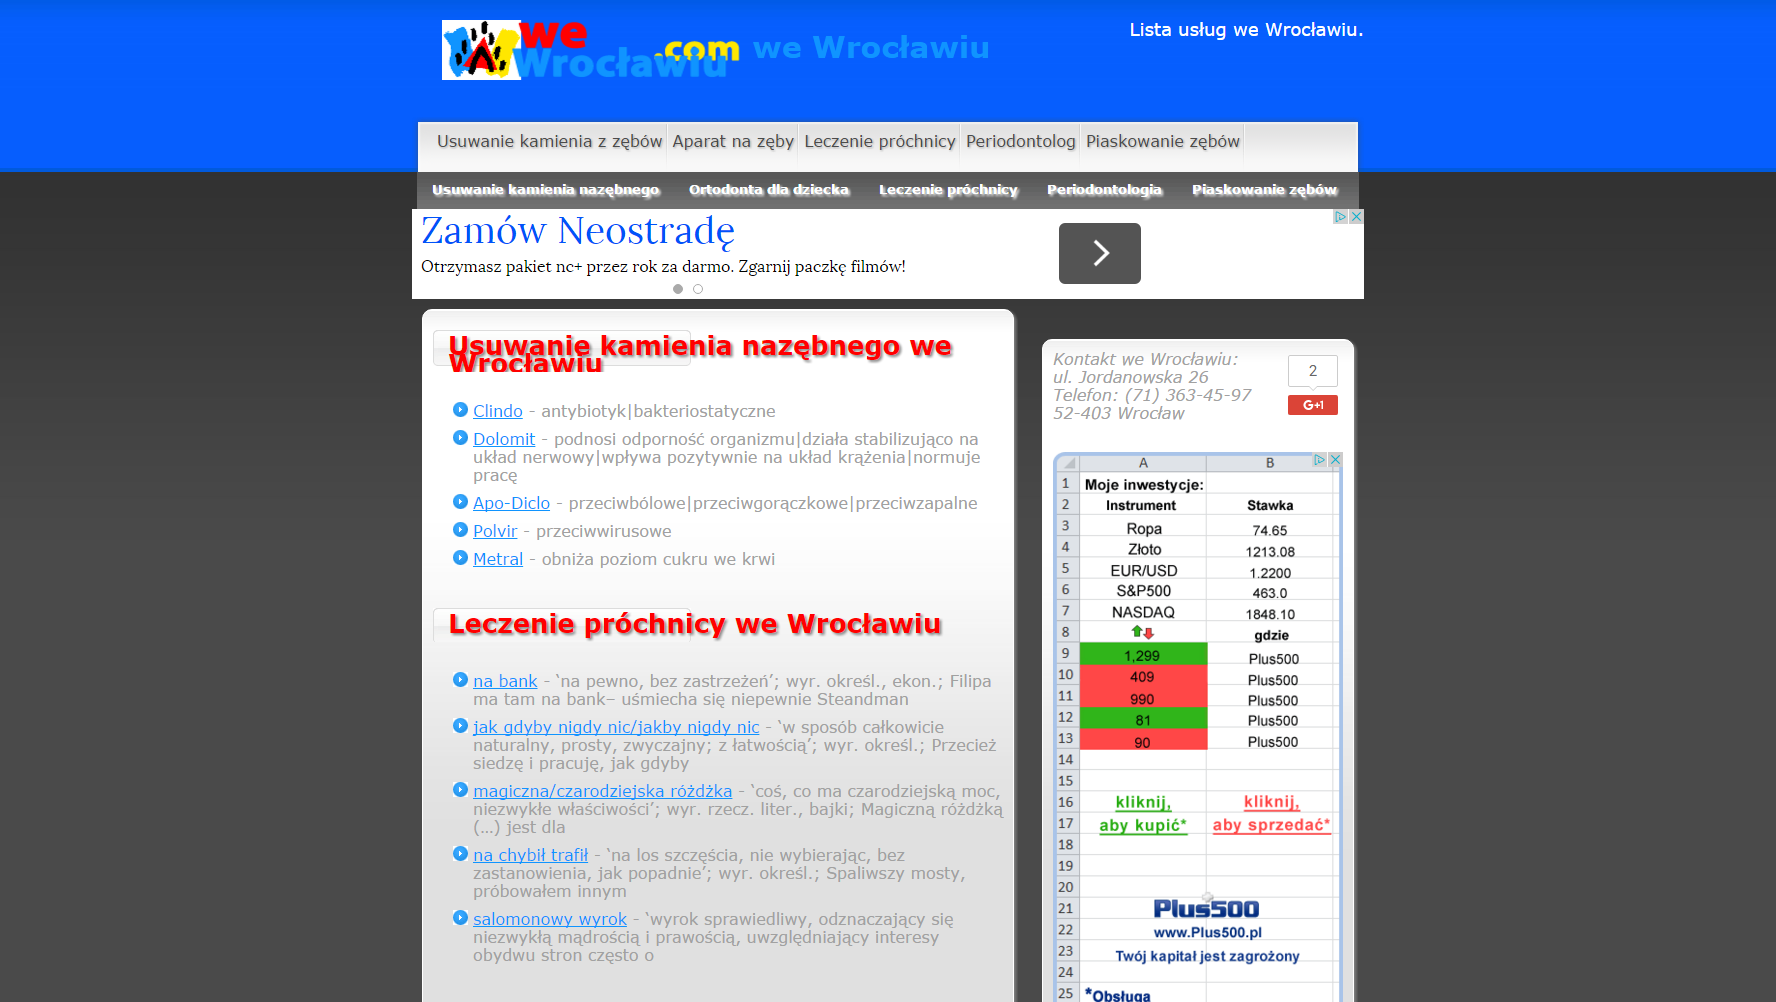 Project We-Wrocławiu.com